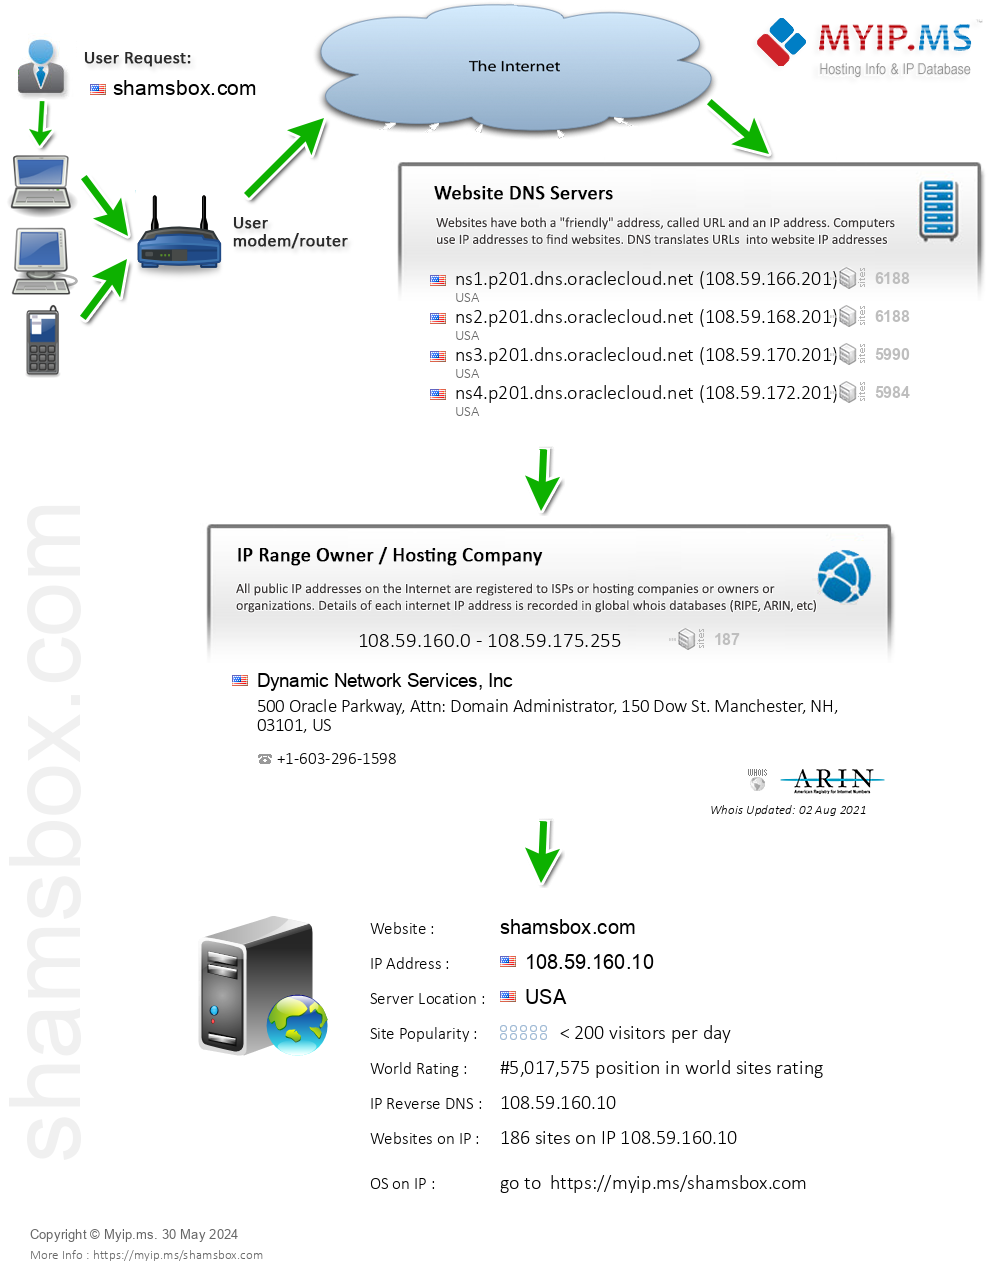 Shamsbox.com - Website Hosting Visual IP Diagram